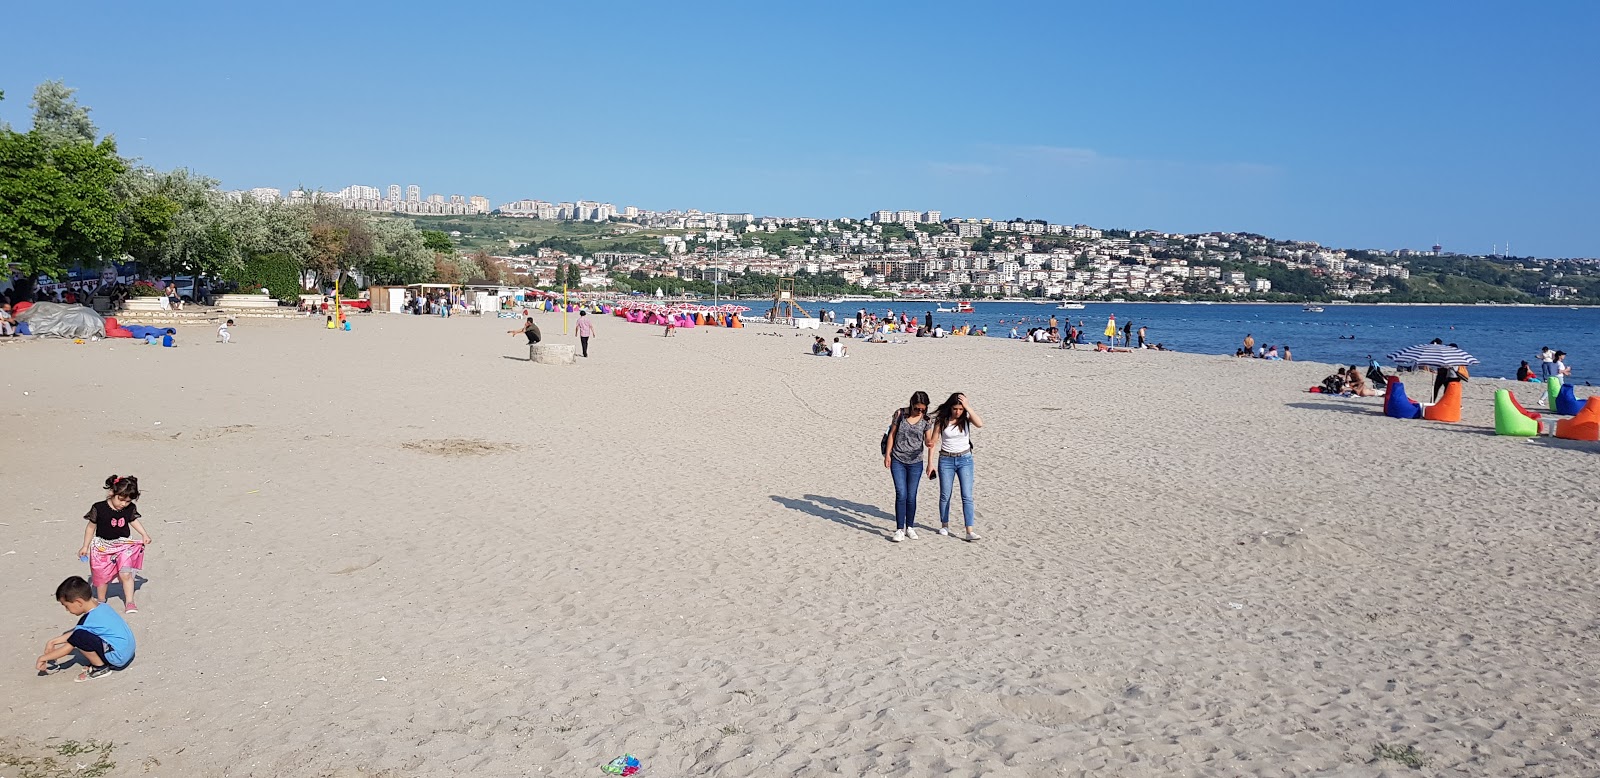 Photo of Buyukcekmece beach beach resort area